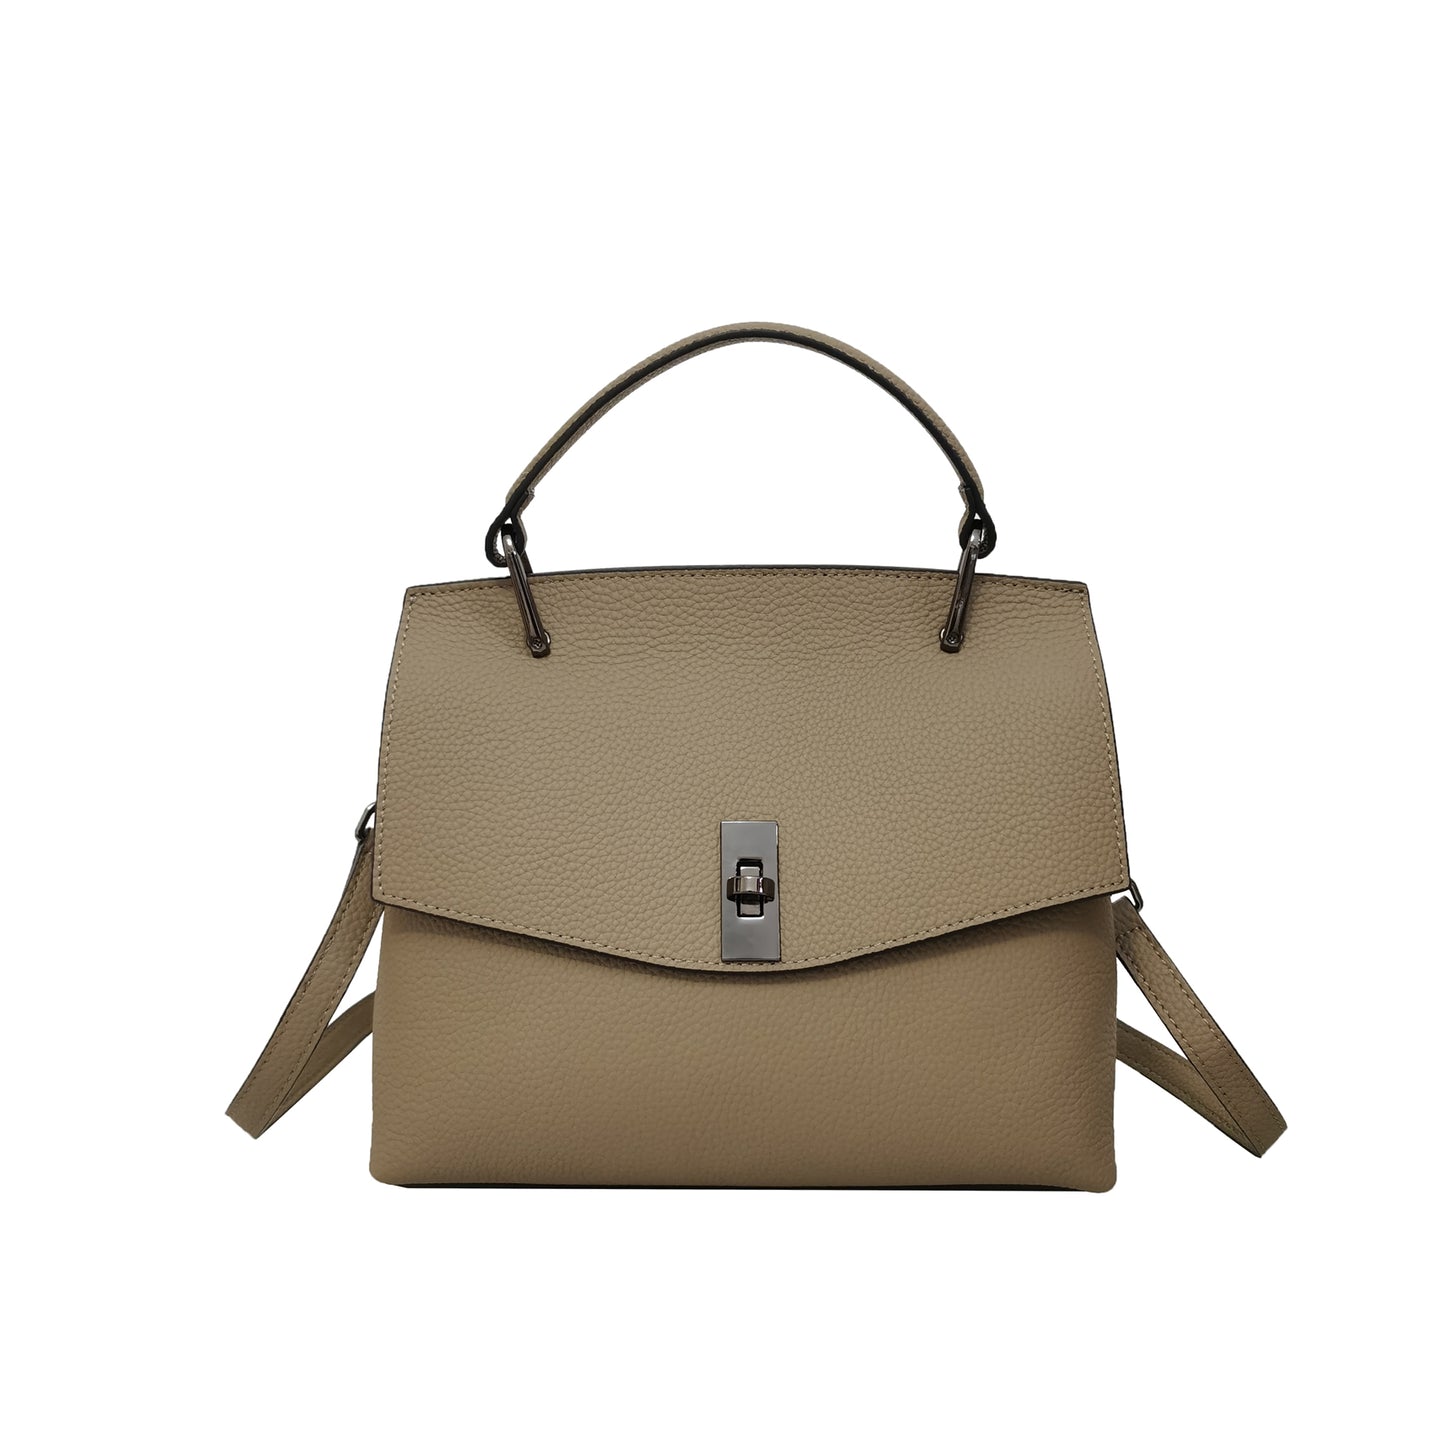 Women's cowhide leather handbag Lari V3 design